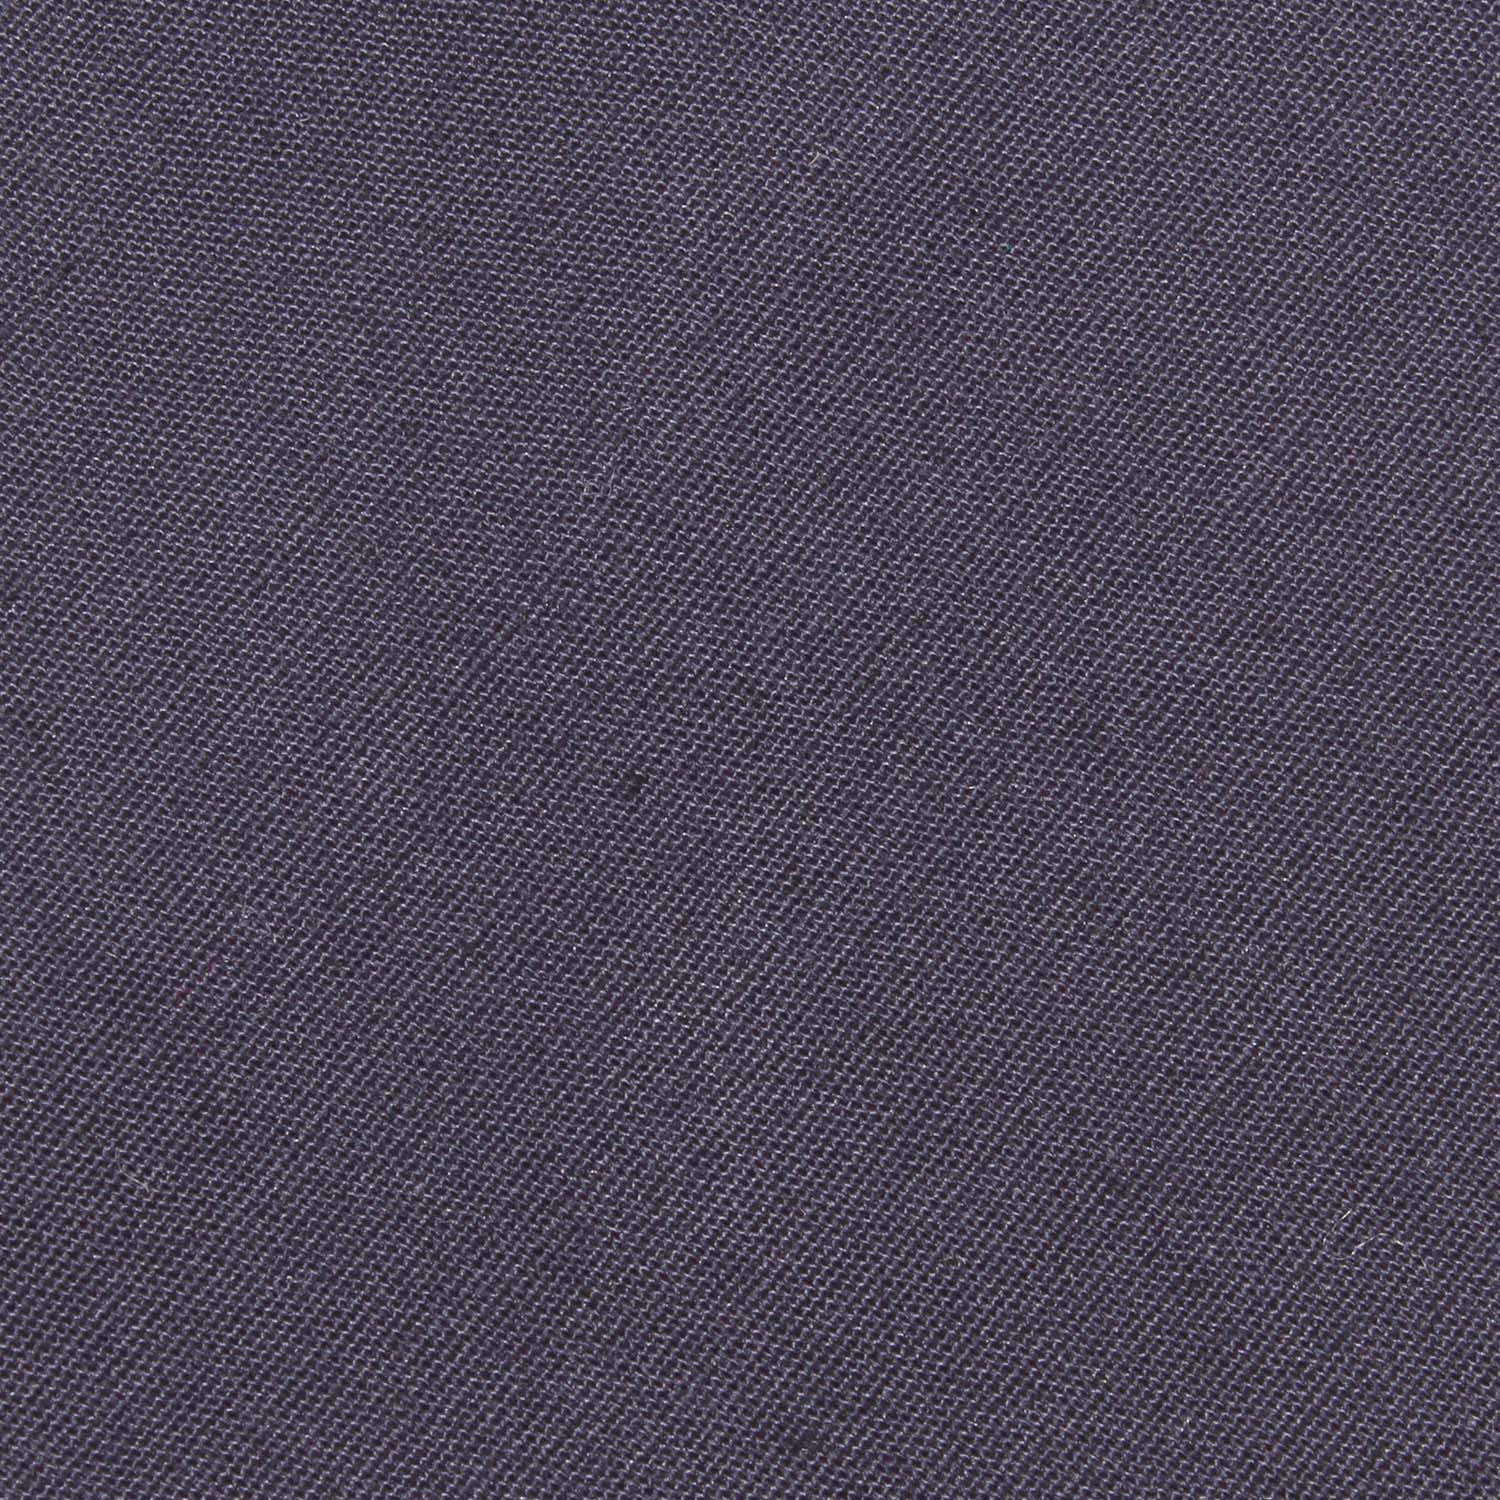 Navy Blue Cotton Fabric Pocket Square C016